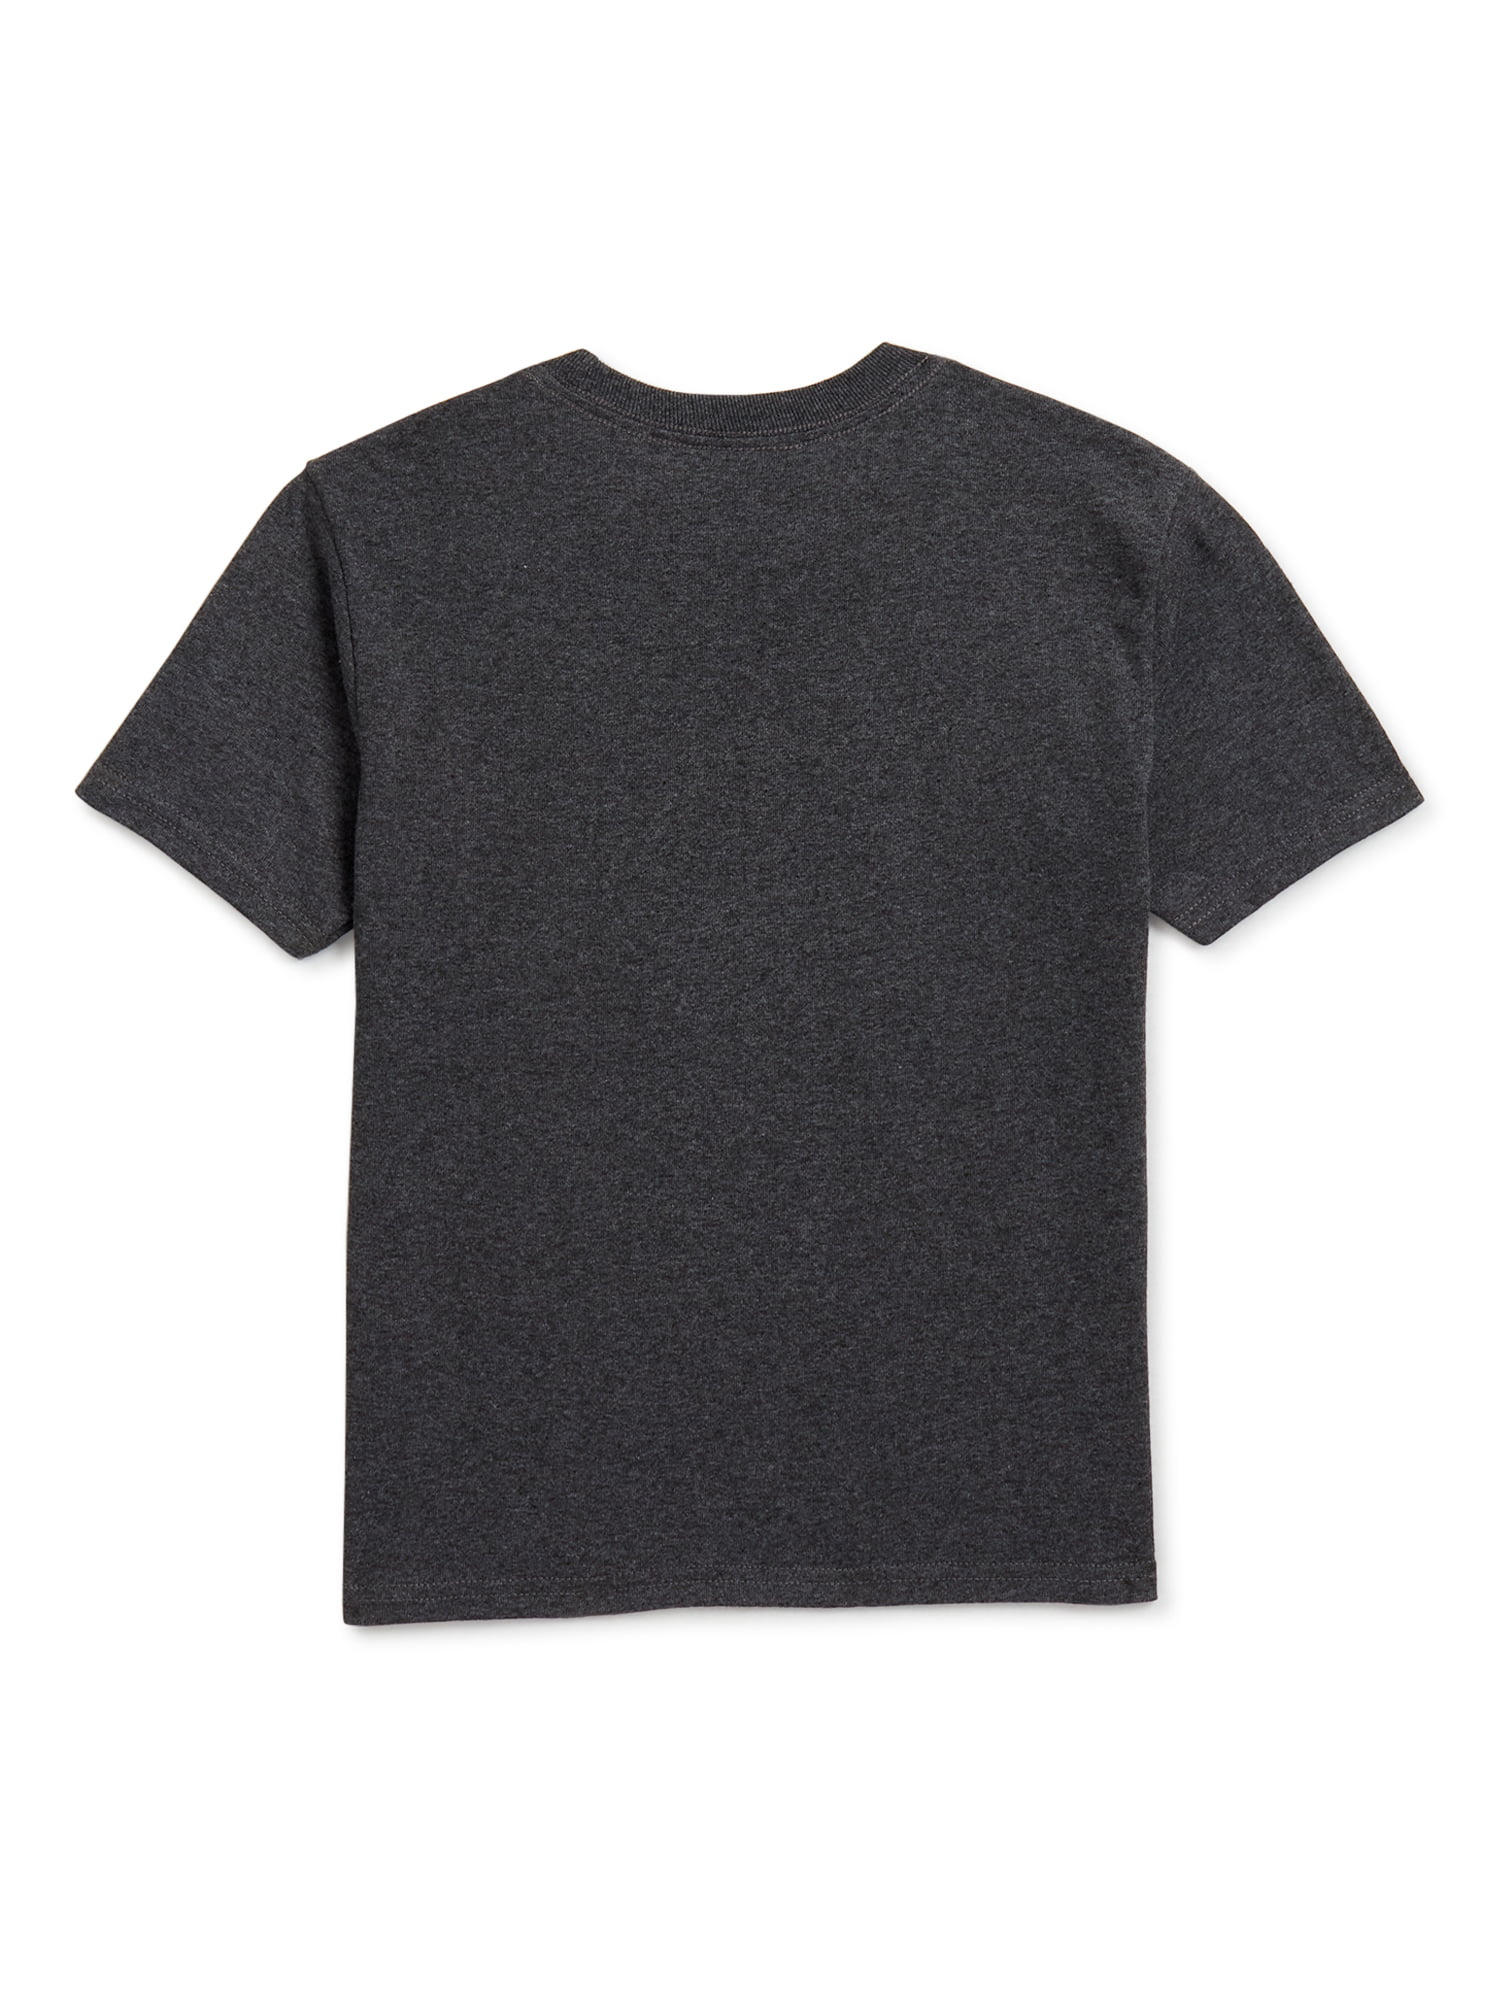 Roblox Boys Short Sleeve Graphic T-Shirt, Sizes 4-18